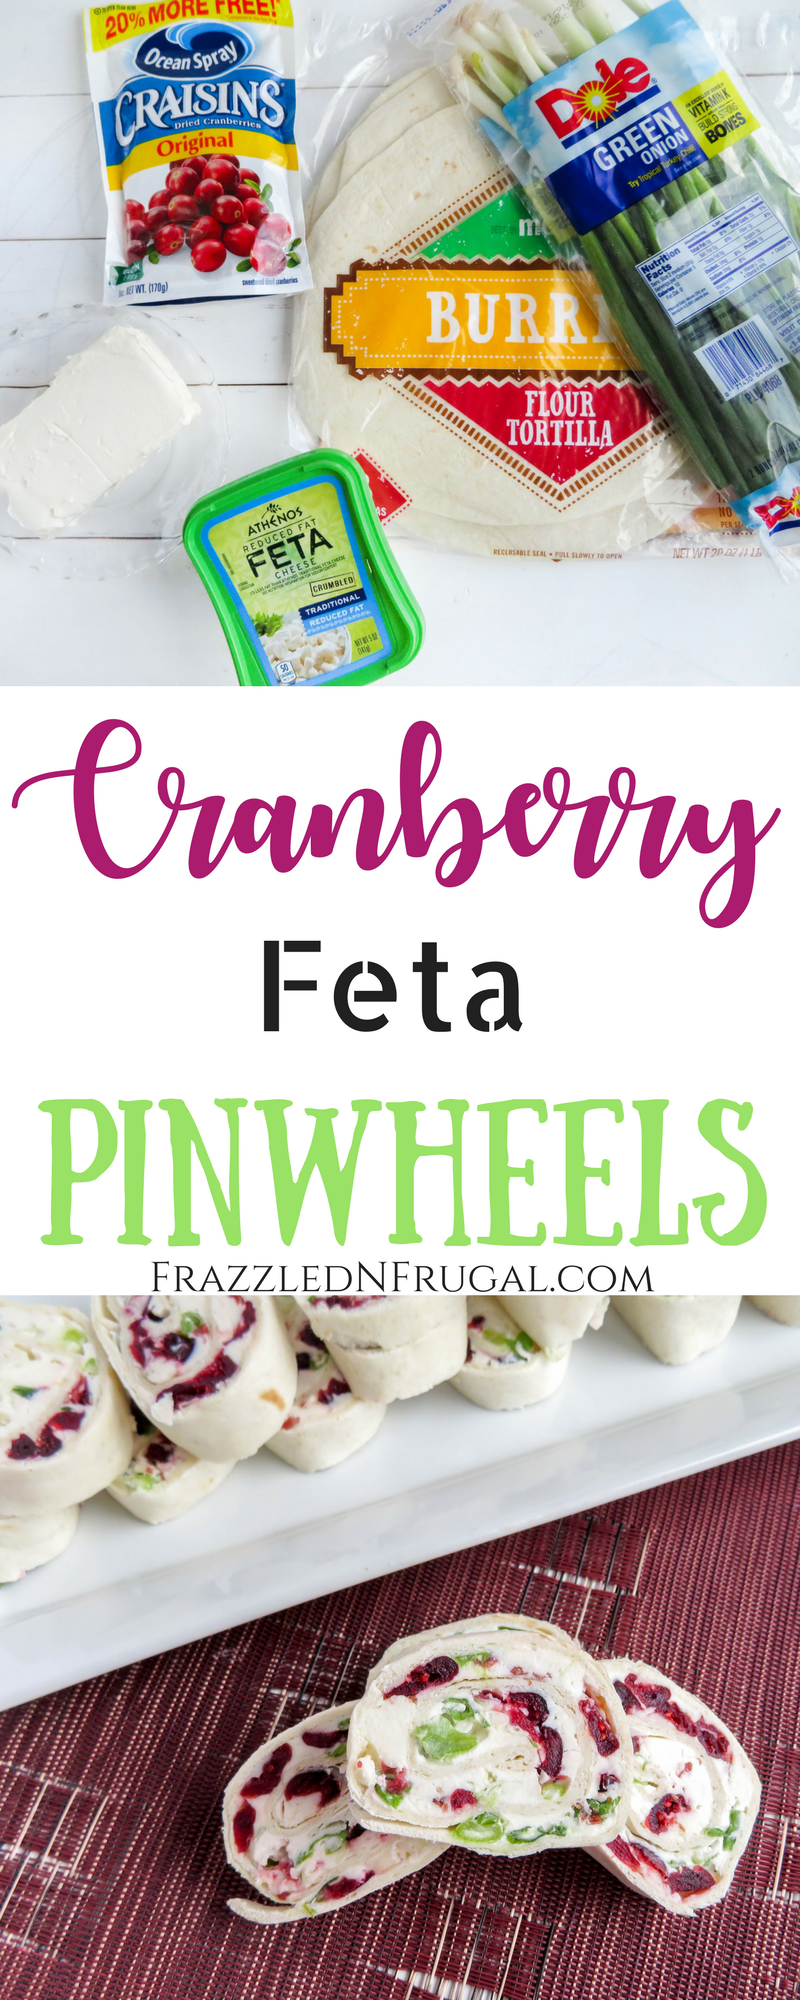 Cranberry Feta Pinwheels